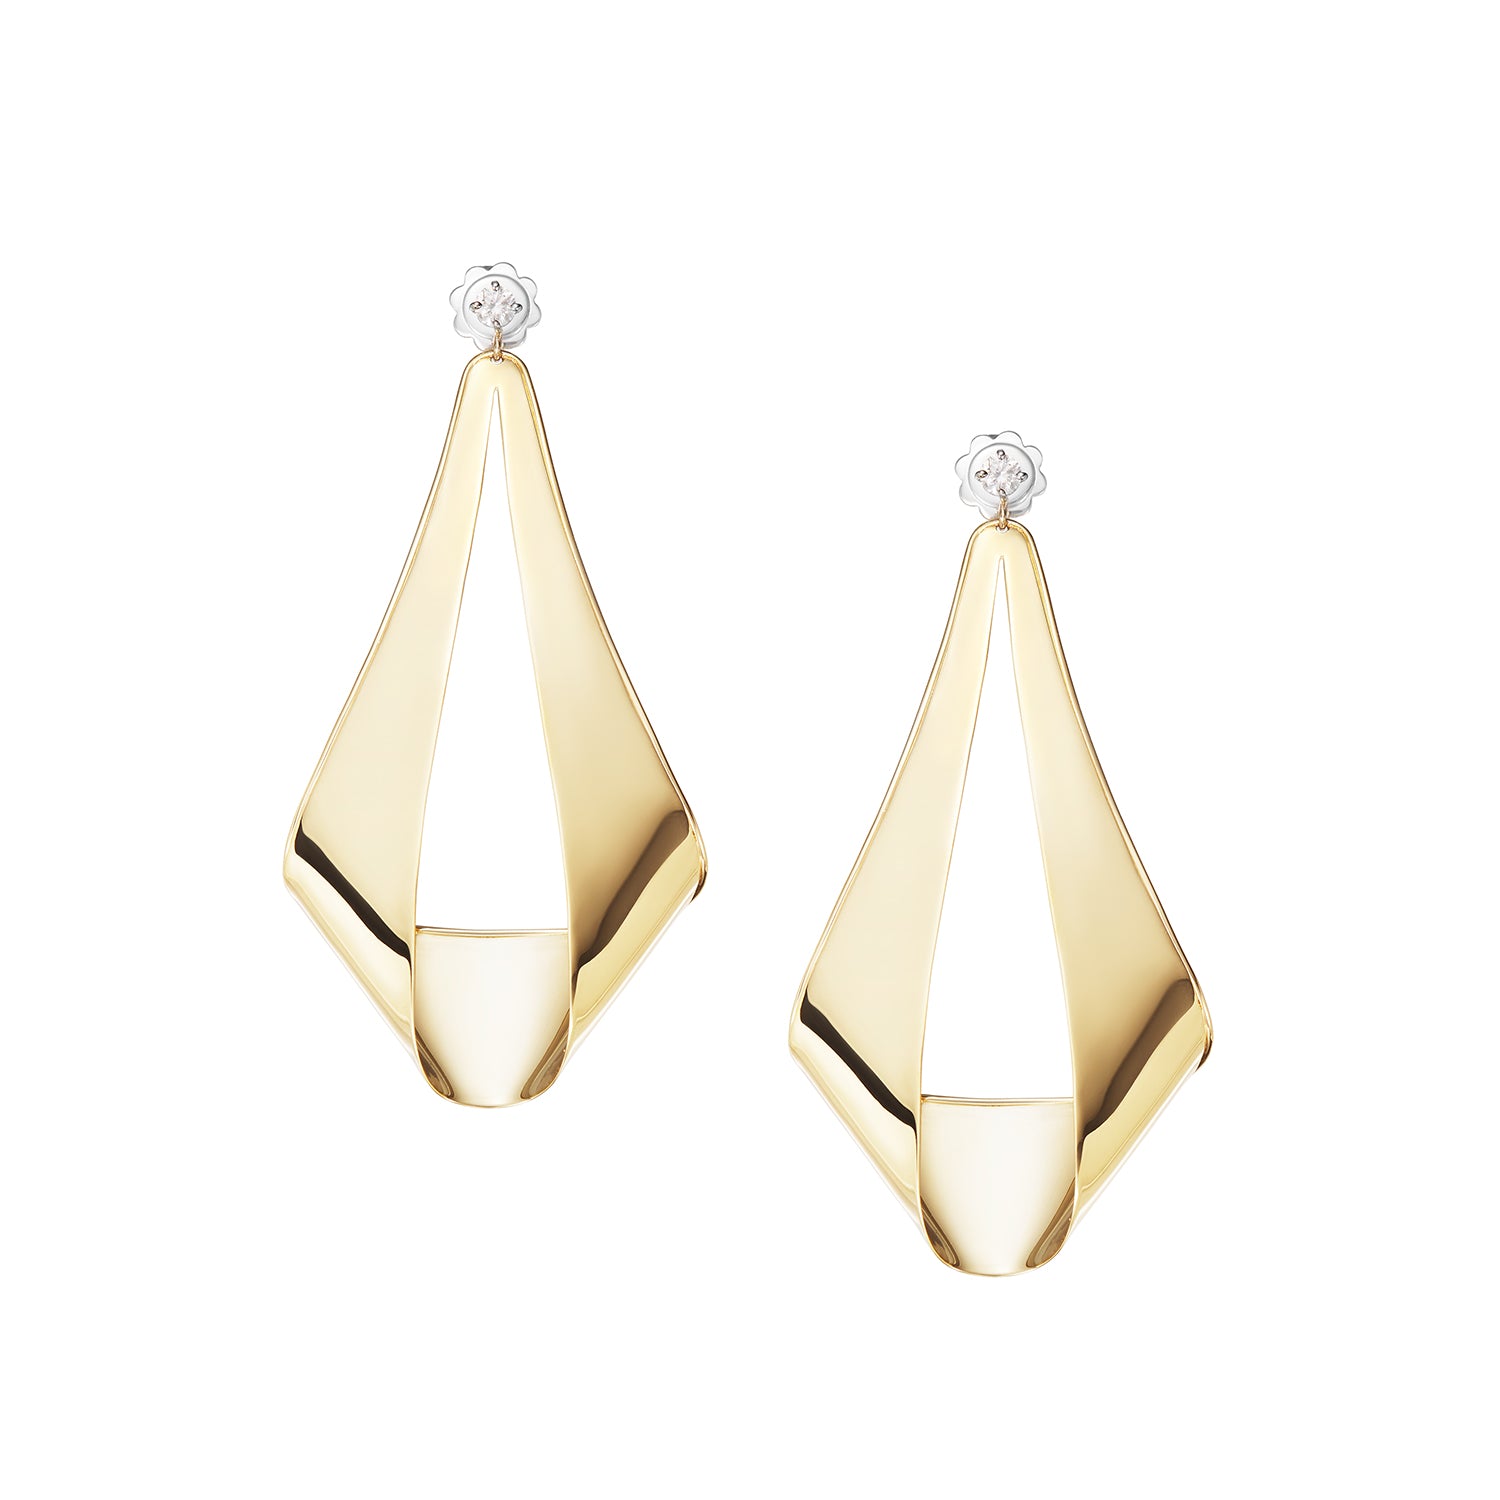 Nebu pendant earrings with diamonds and shiny edge